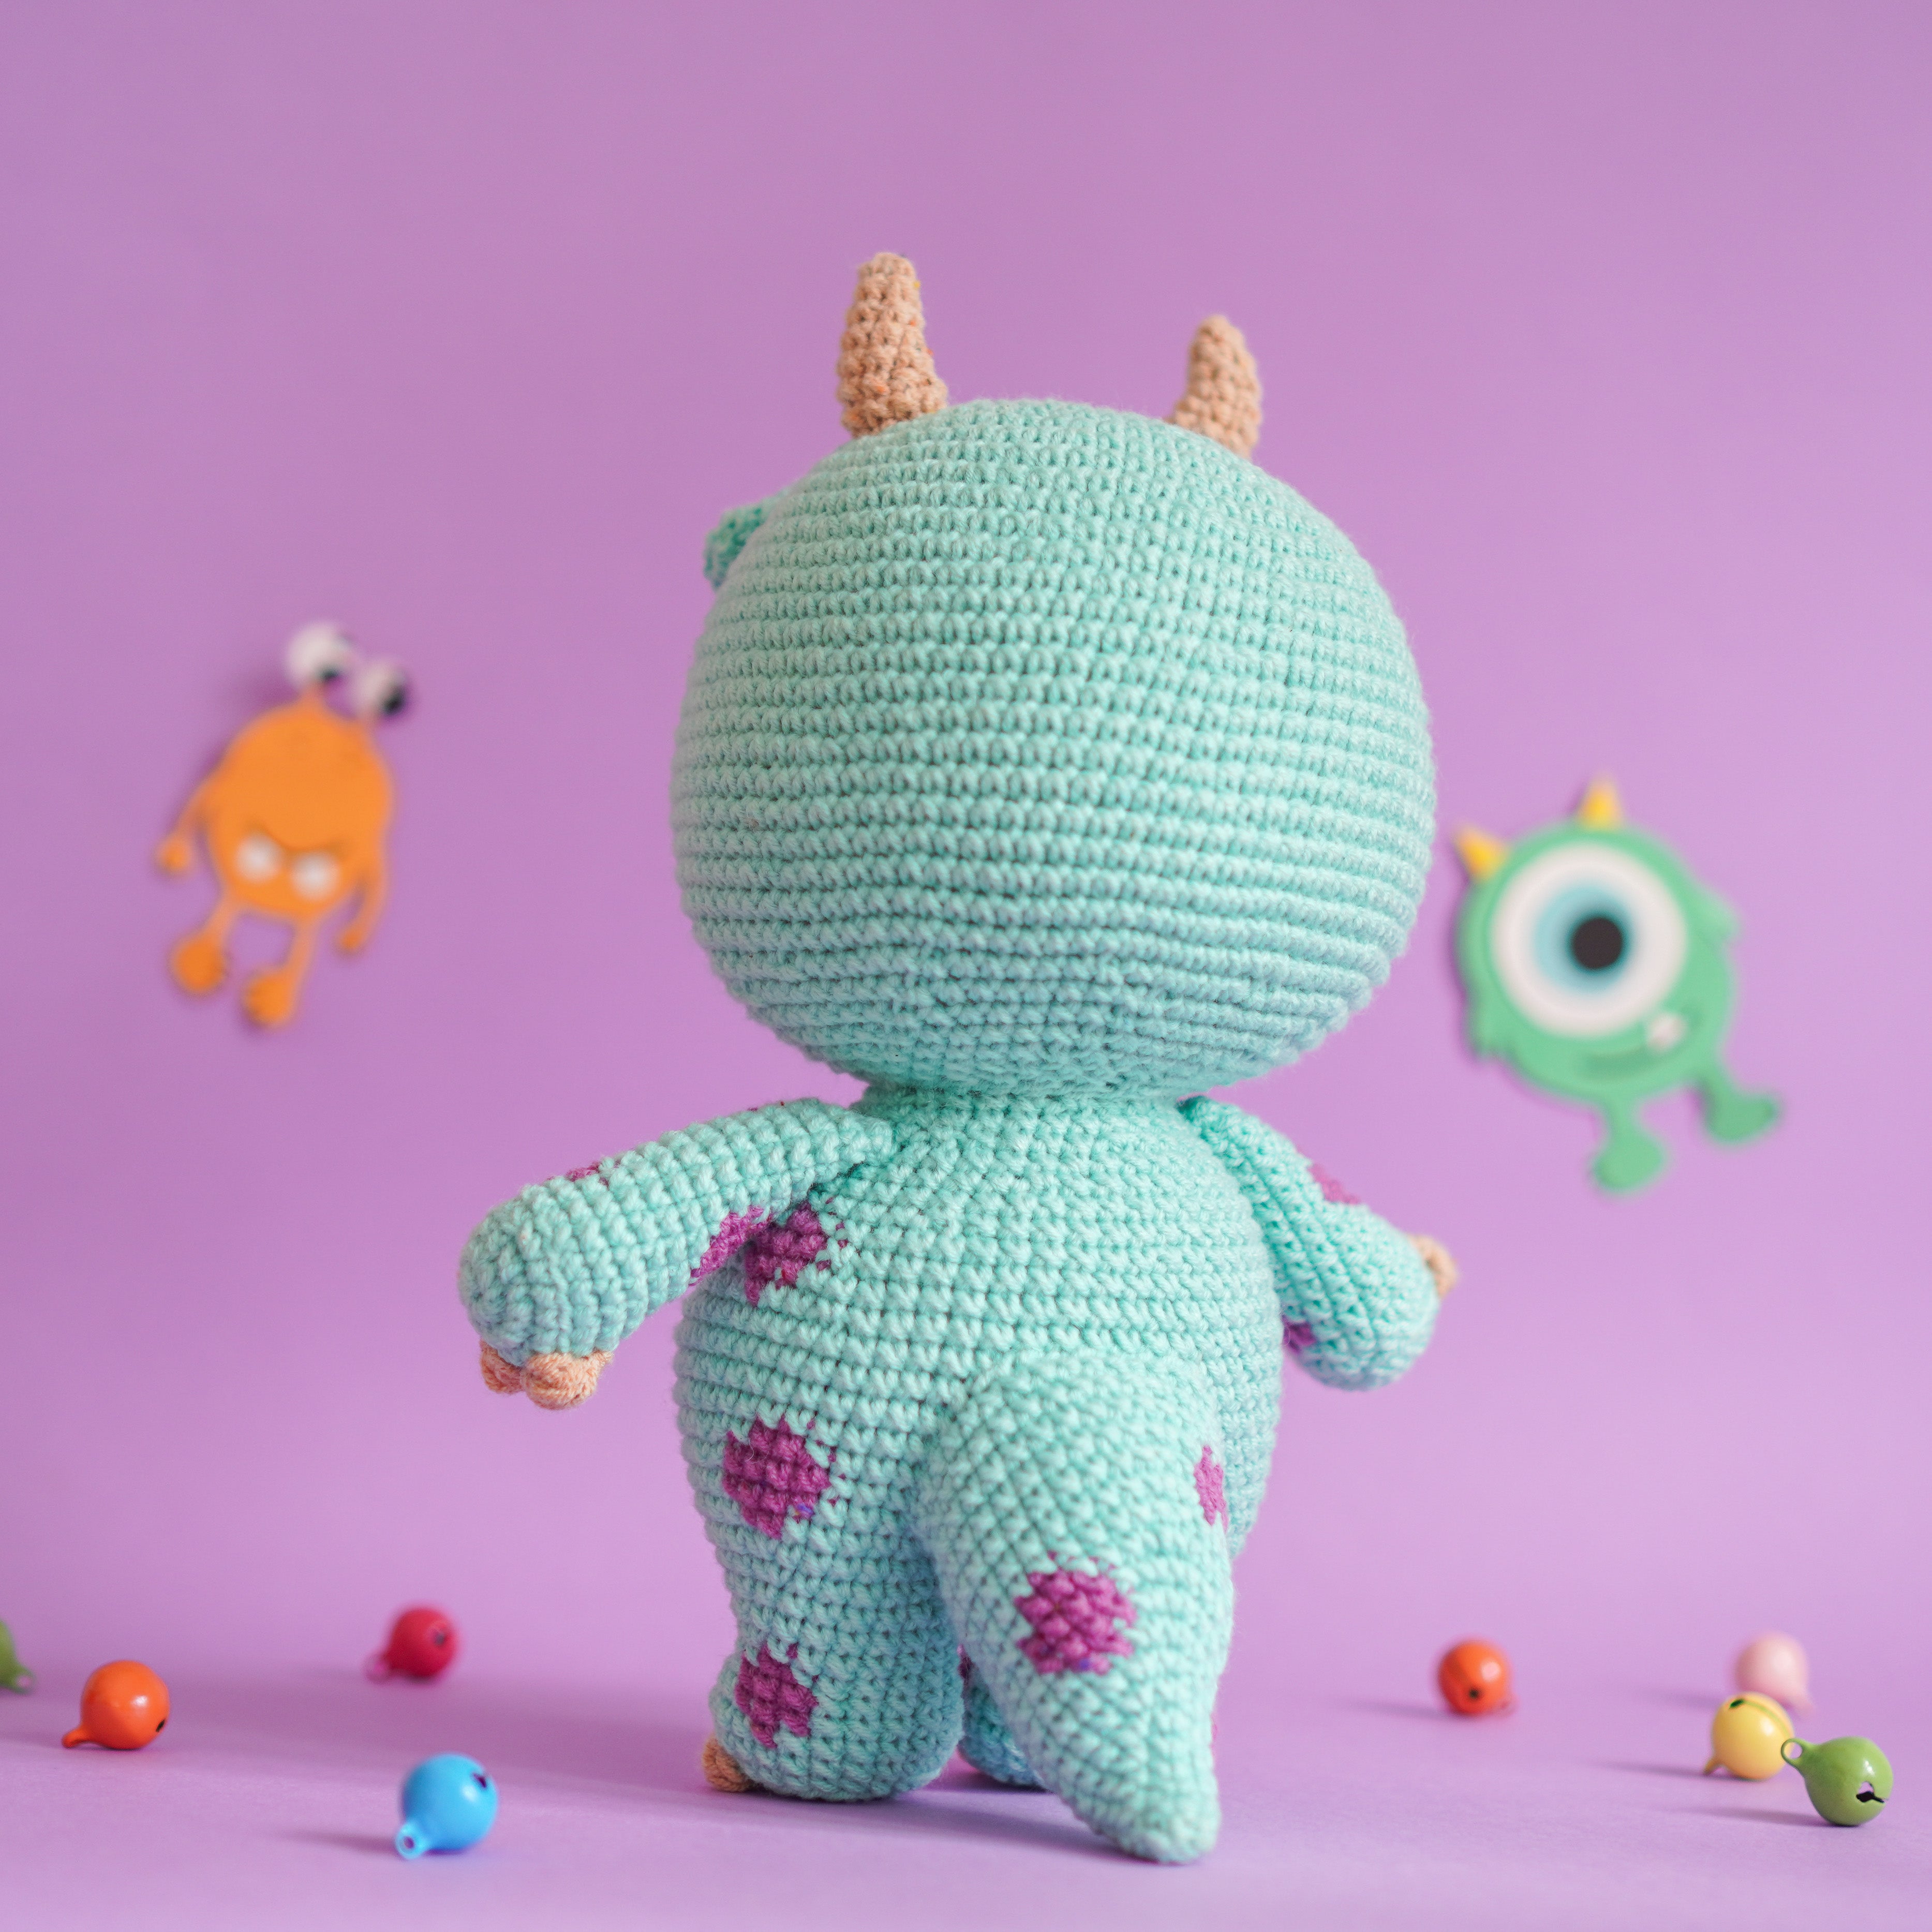 Little Monster Crochet Pattern by Aquariwool Crochet (Crochet Doll Pattern/Amigurumi Pattern for Baby gift)